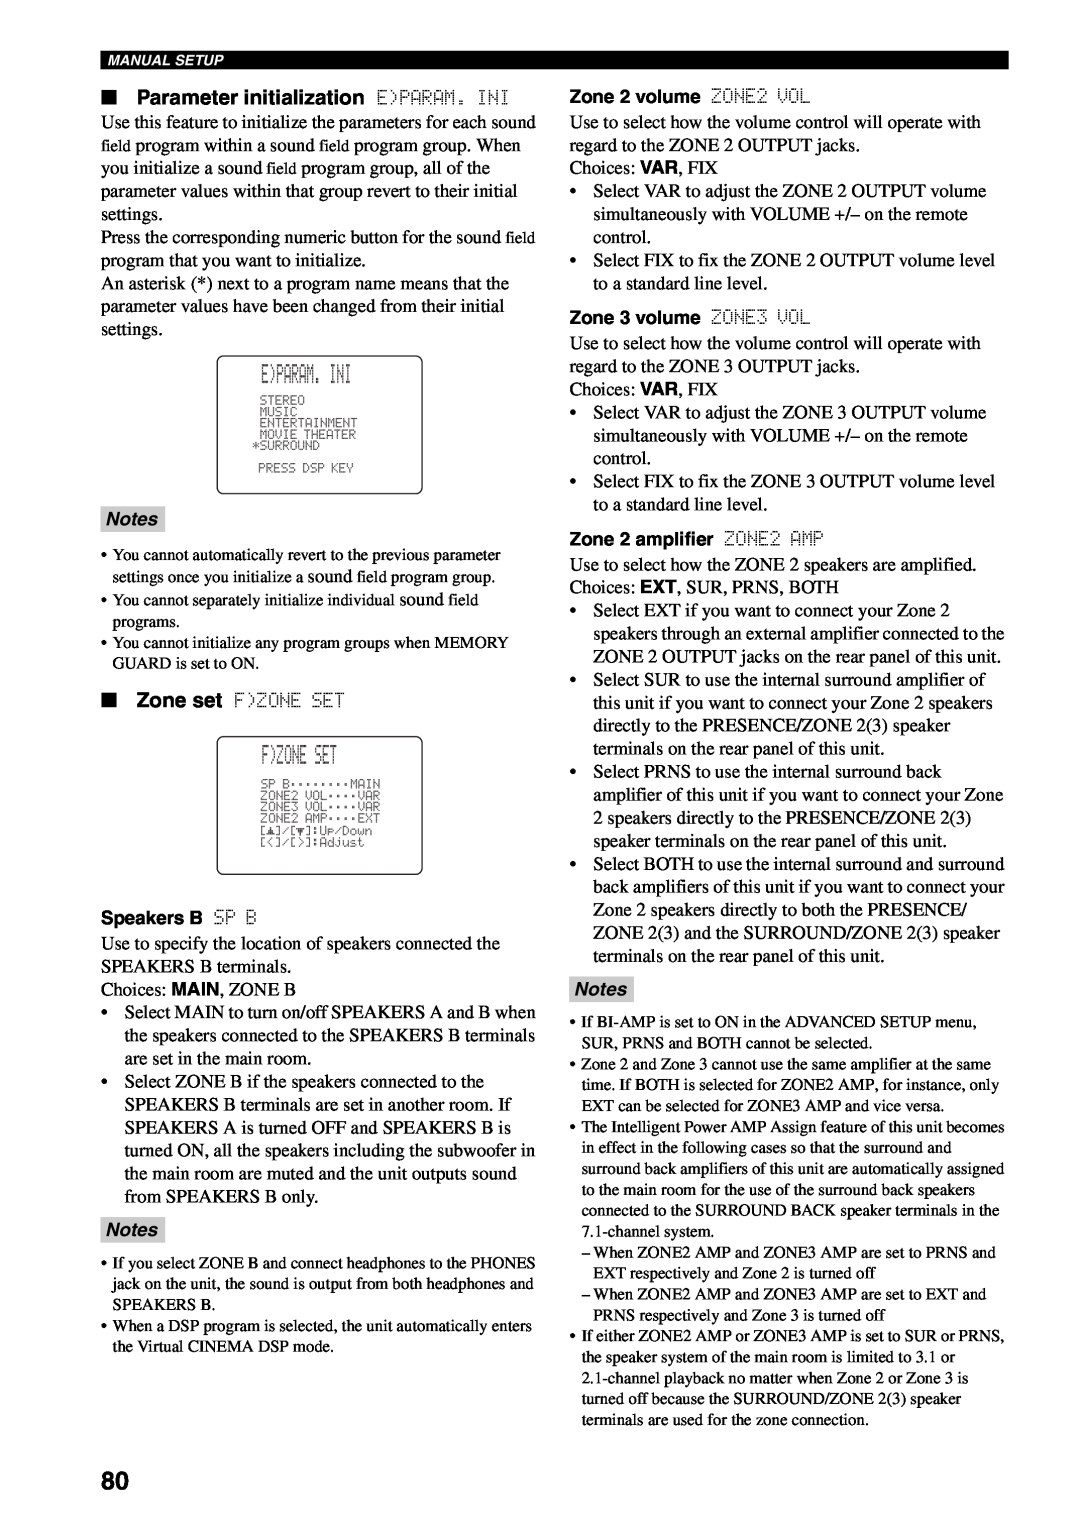 Yamaha RX-V1600 owner manual Eparam. Ini, Fzone Set, Parameter initialization EPARAM. INI, Notes 